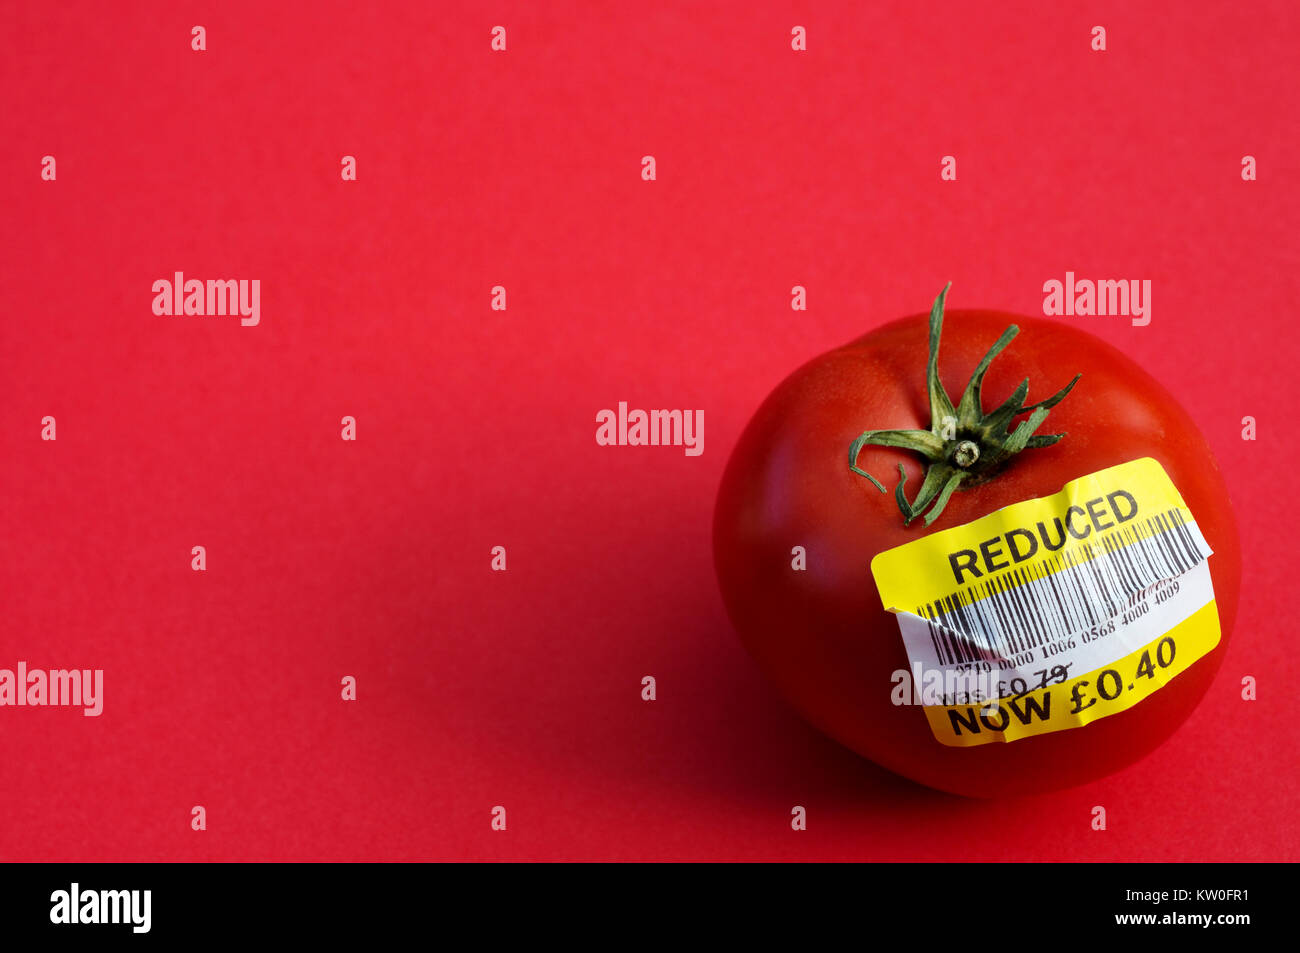 Reduced price tomato Stock Photo